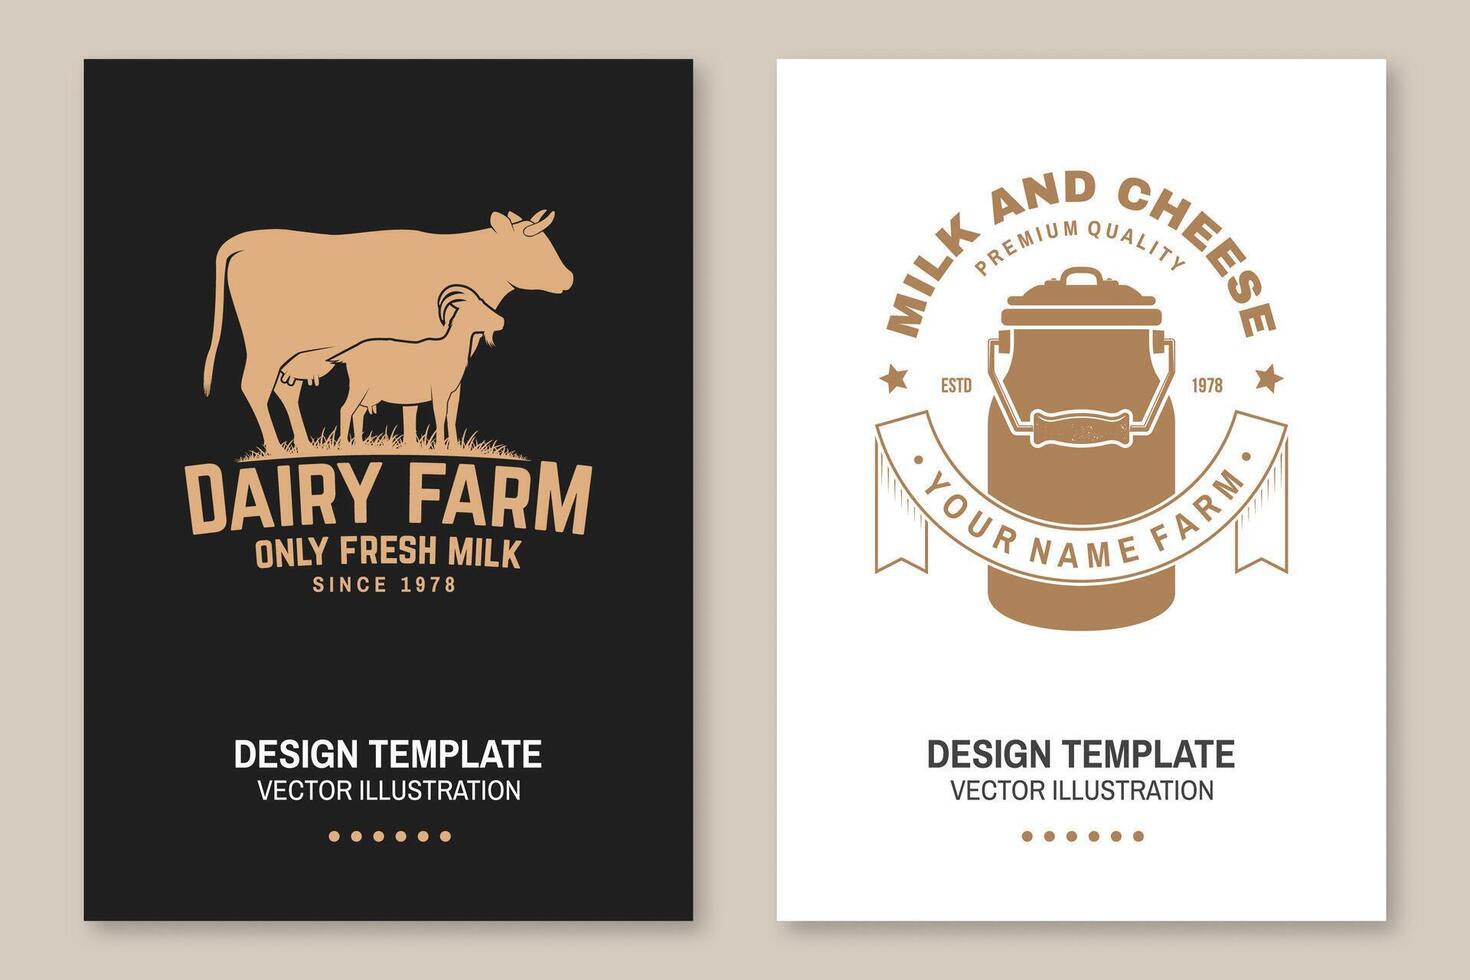 zuivel boerderij. enkel en alleen vers melk insigne, logo. vector folder, brochure, banier, poster ontwerp met koe, geit, melk kan silhouet. sjabloon voor zuivel en melk boerderij bedrijf, winkel, markt, verpakking en menu